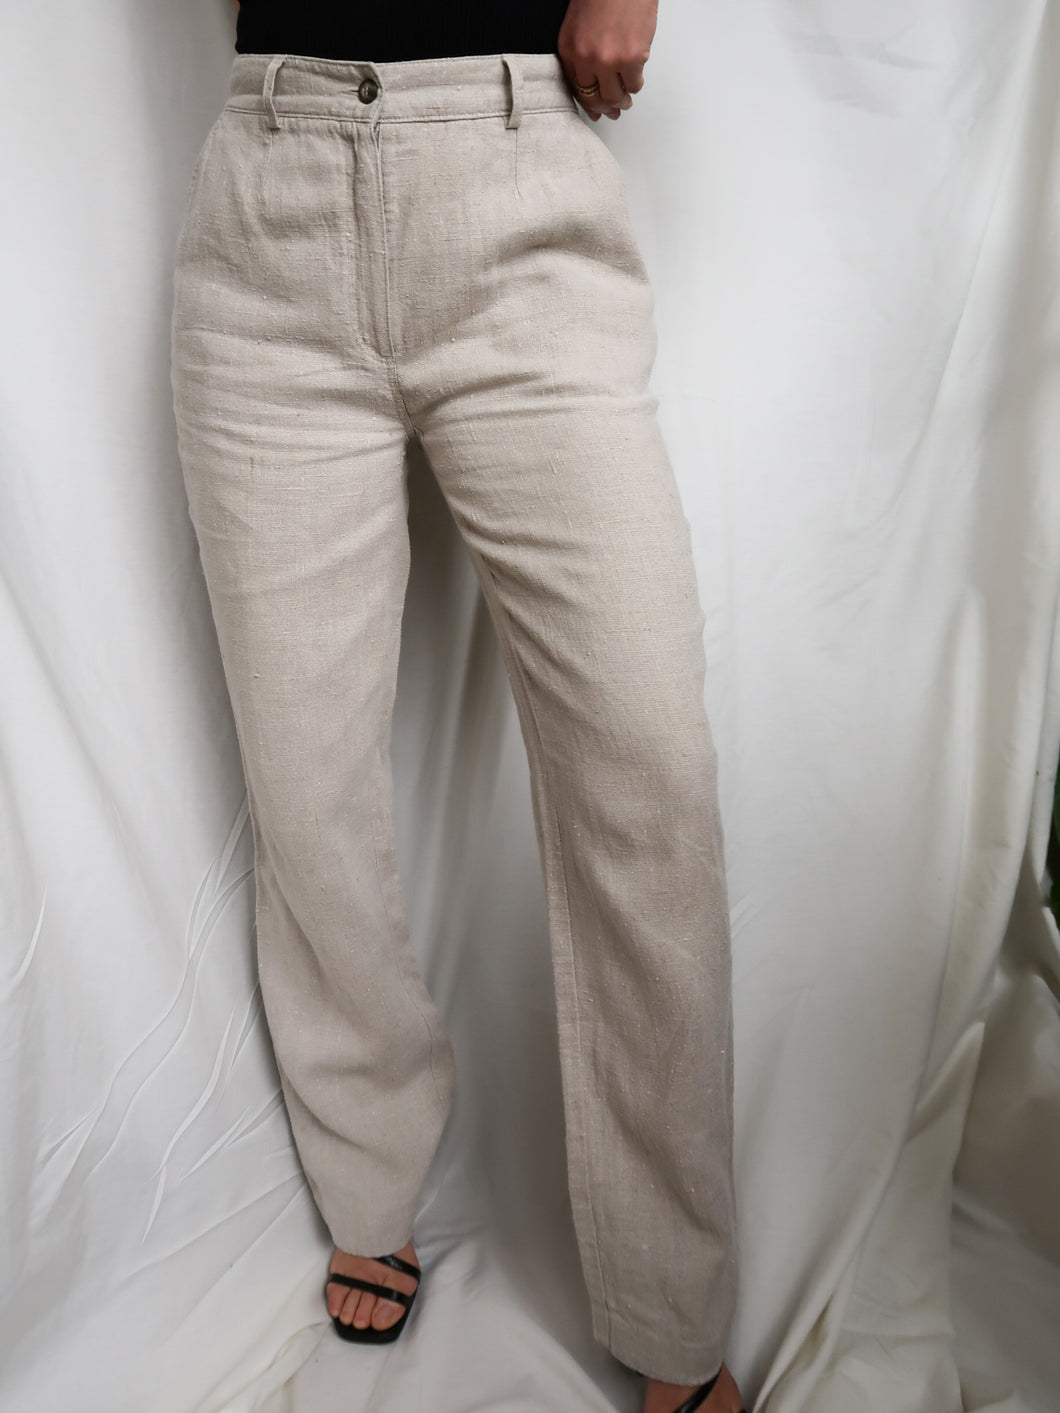 « Temecula » linen pants